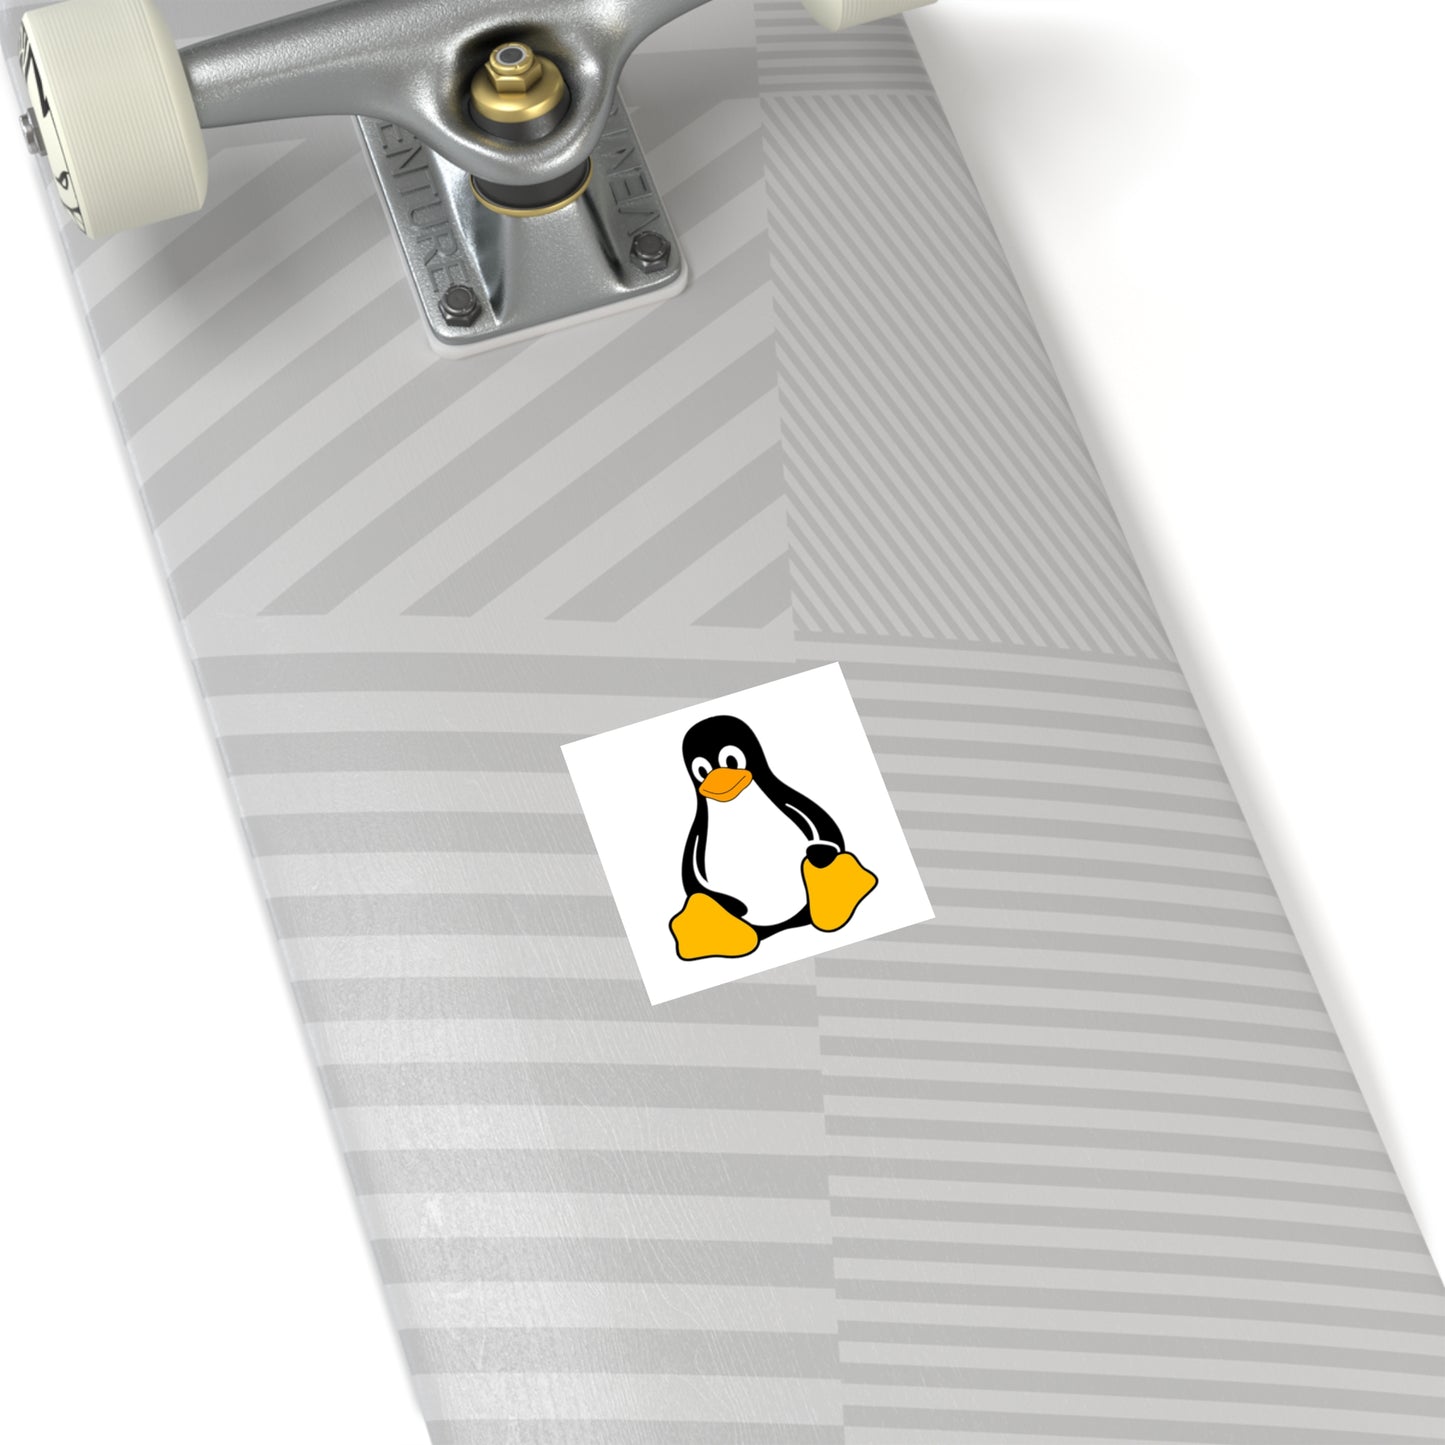 Tux the penguin, Square Stickers, V.2